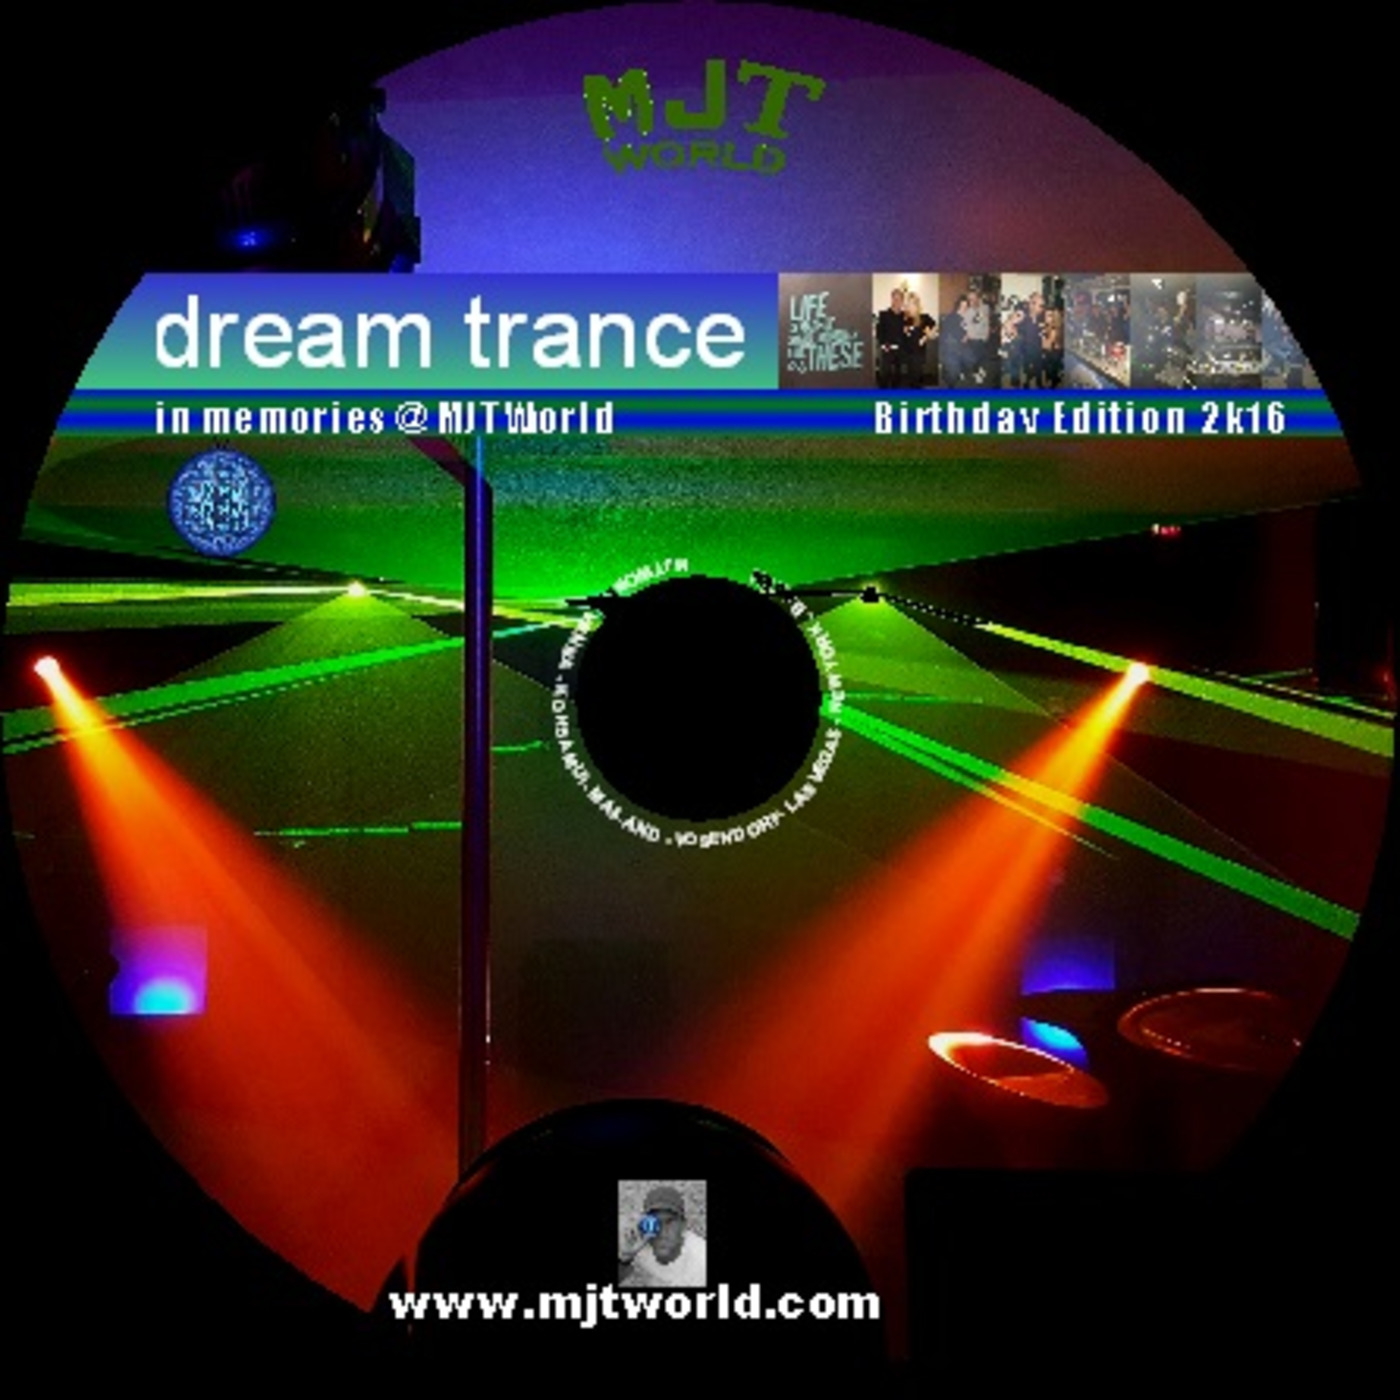 Dreamtrance Birthay Edition 2k16 @ MJTWorld.com